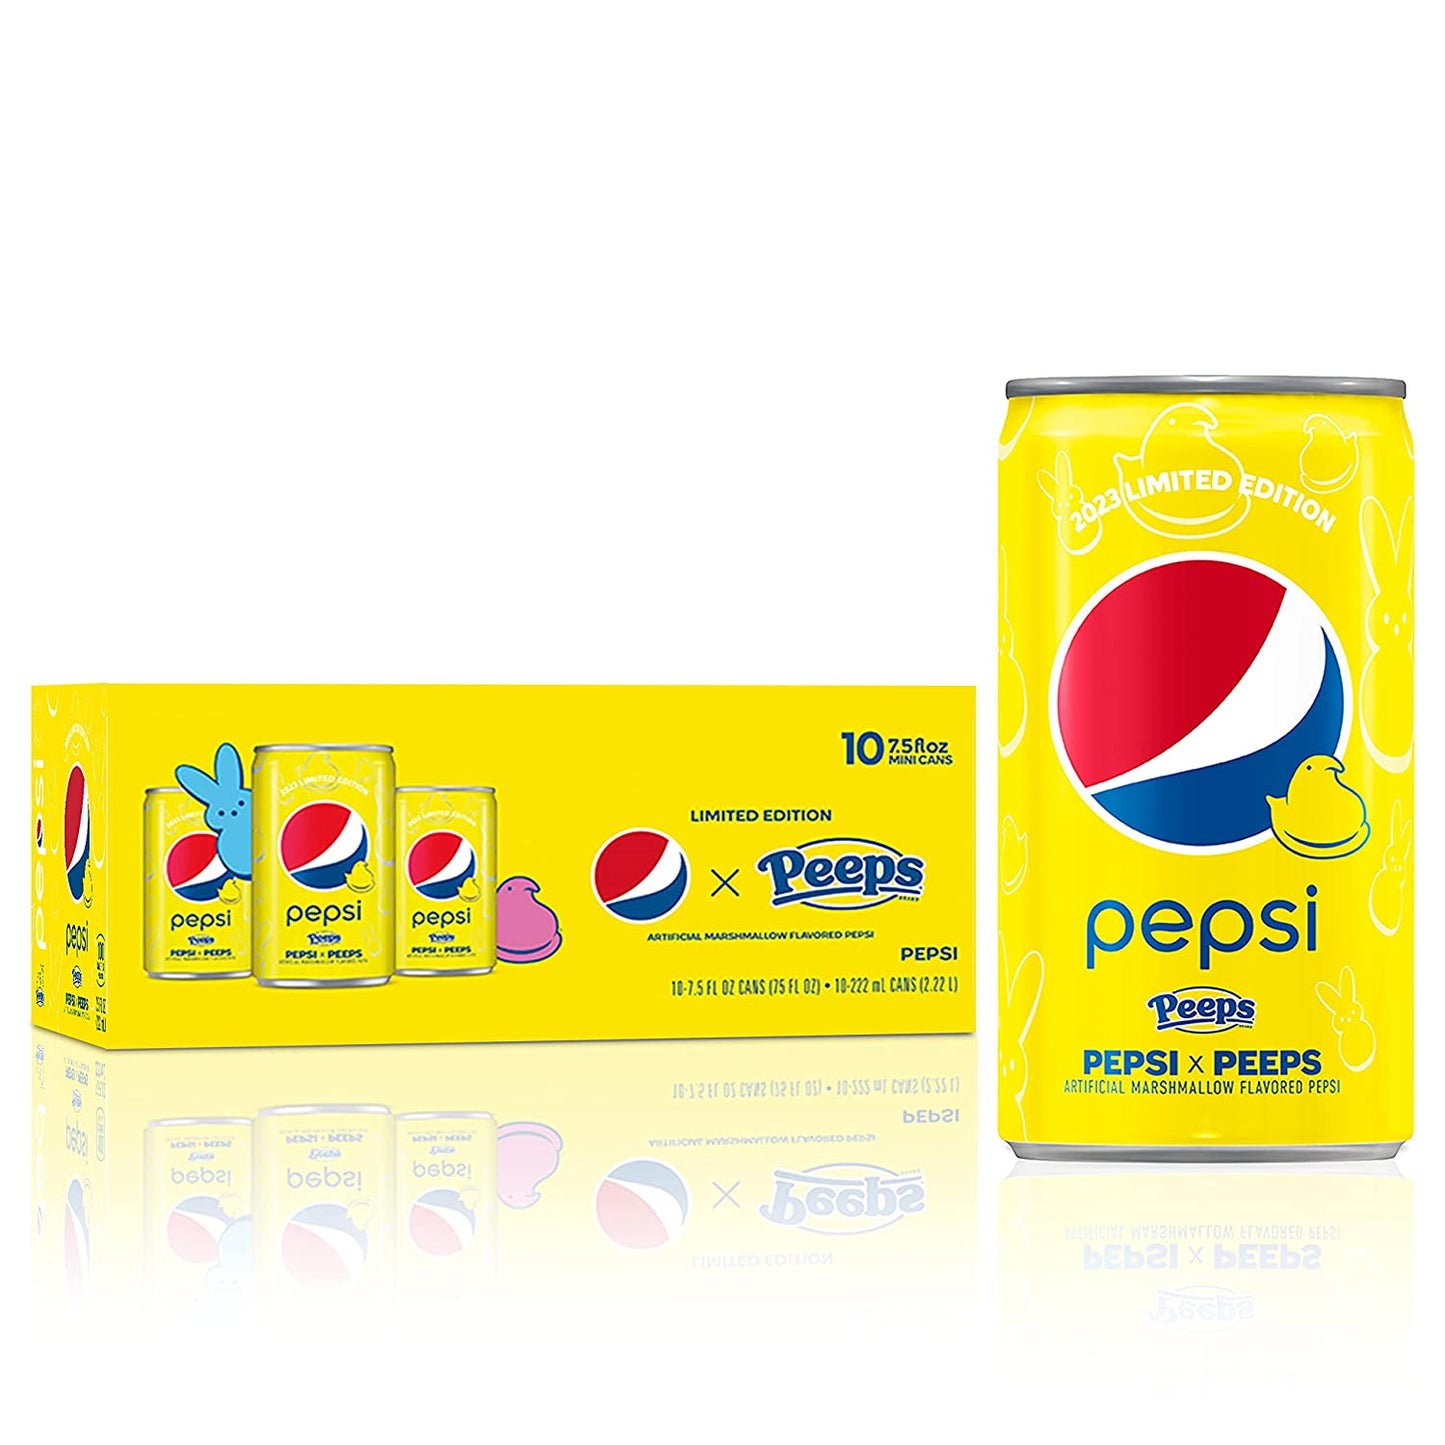 Pepsi Peeps Mini Cans 7.5oz 10pack - ULTRA SUPER RARE LIMITED EDITION